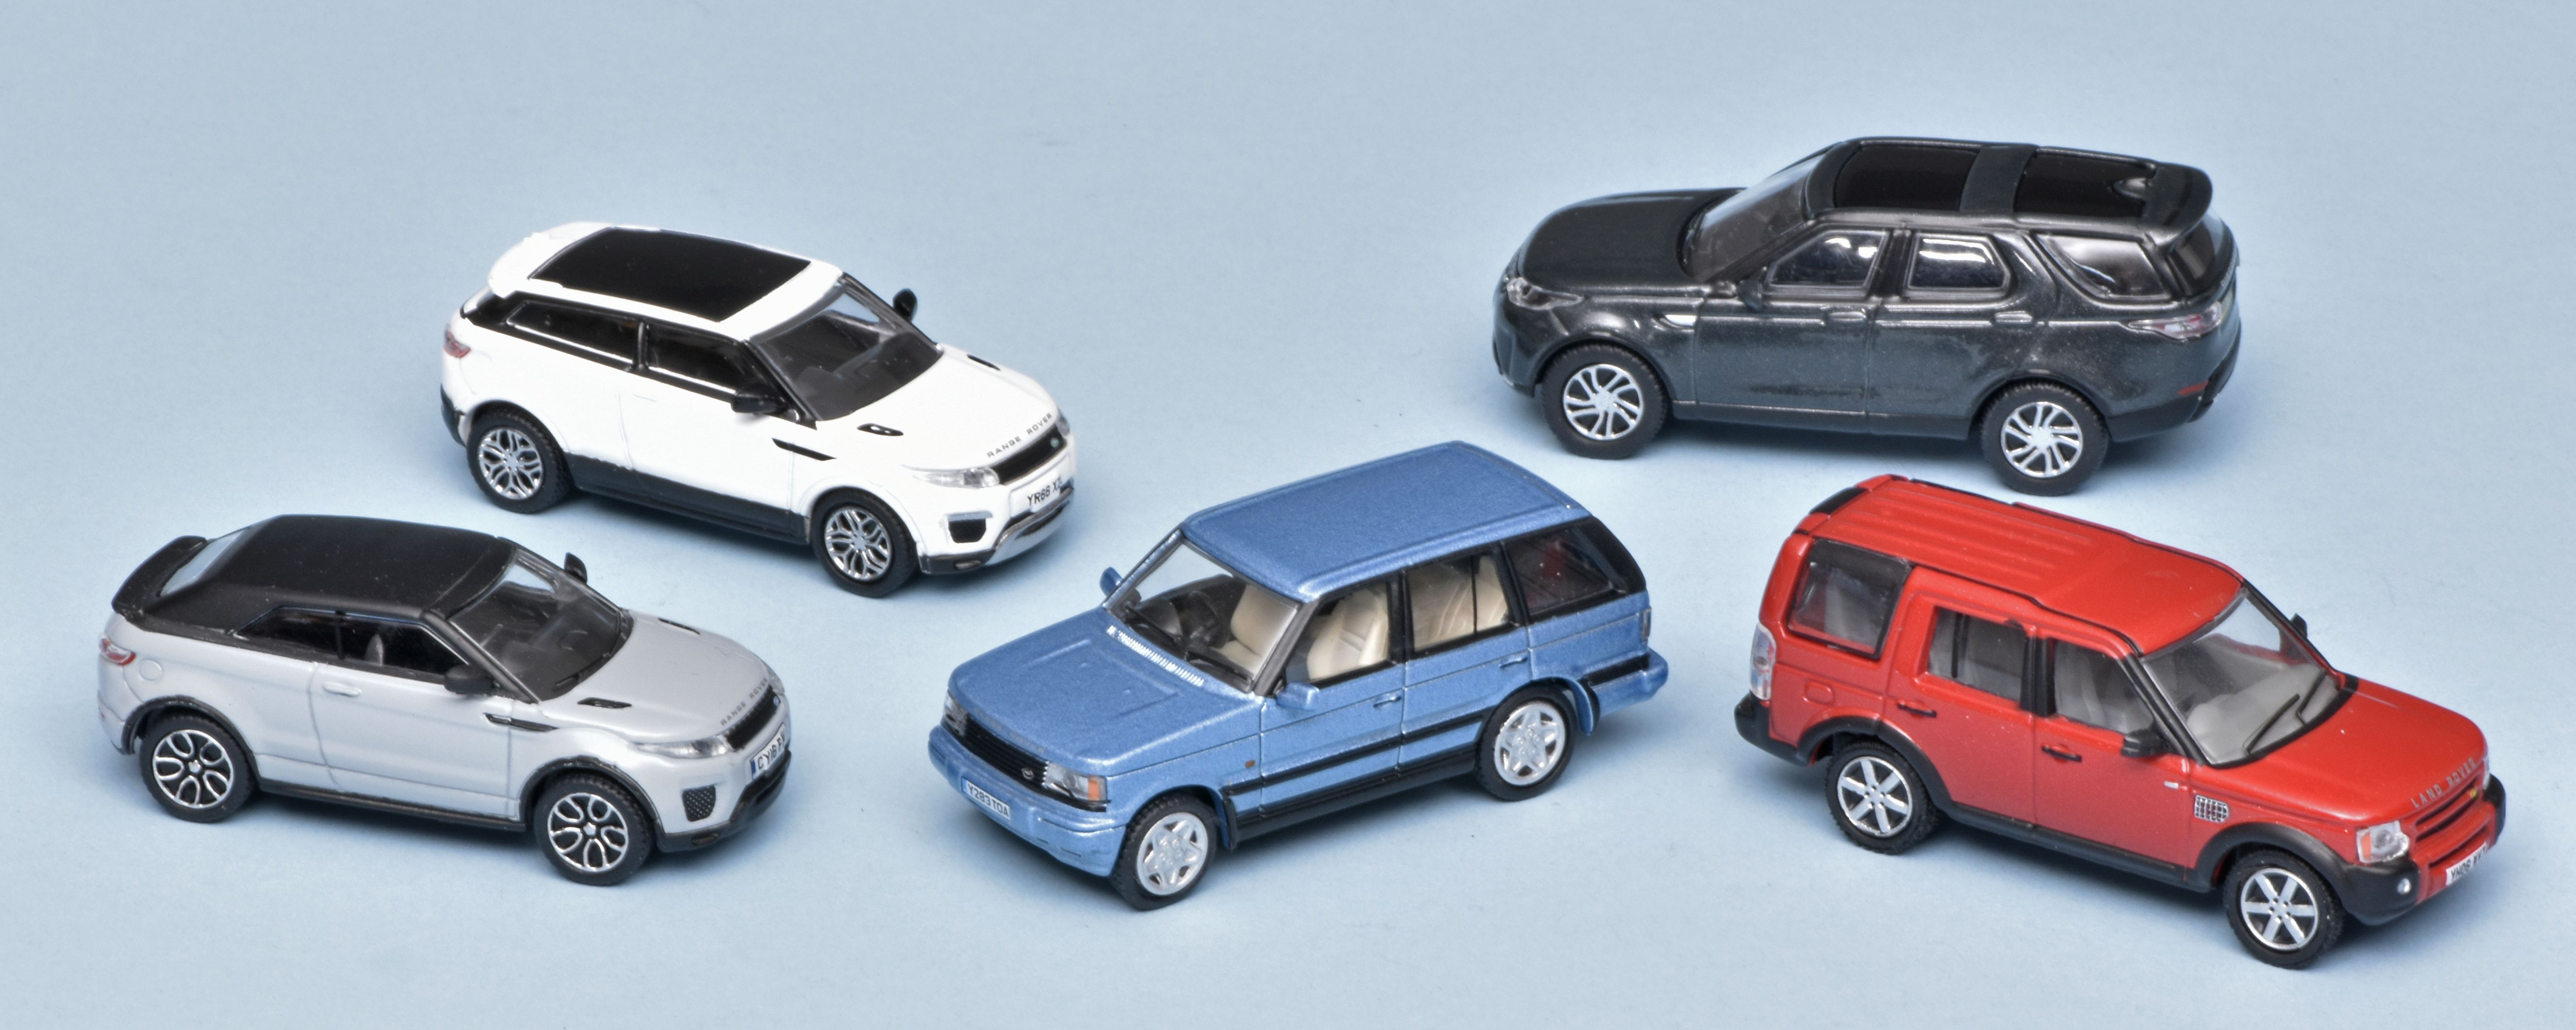 toelage Patois Metropolitan Land Rover - NAMAC en Auto in Miniatuur - NAMAC en AIM